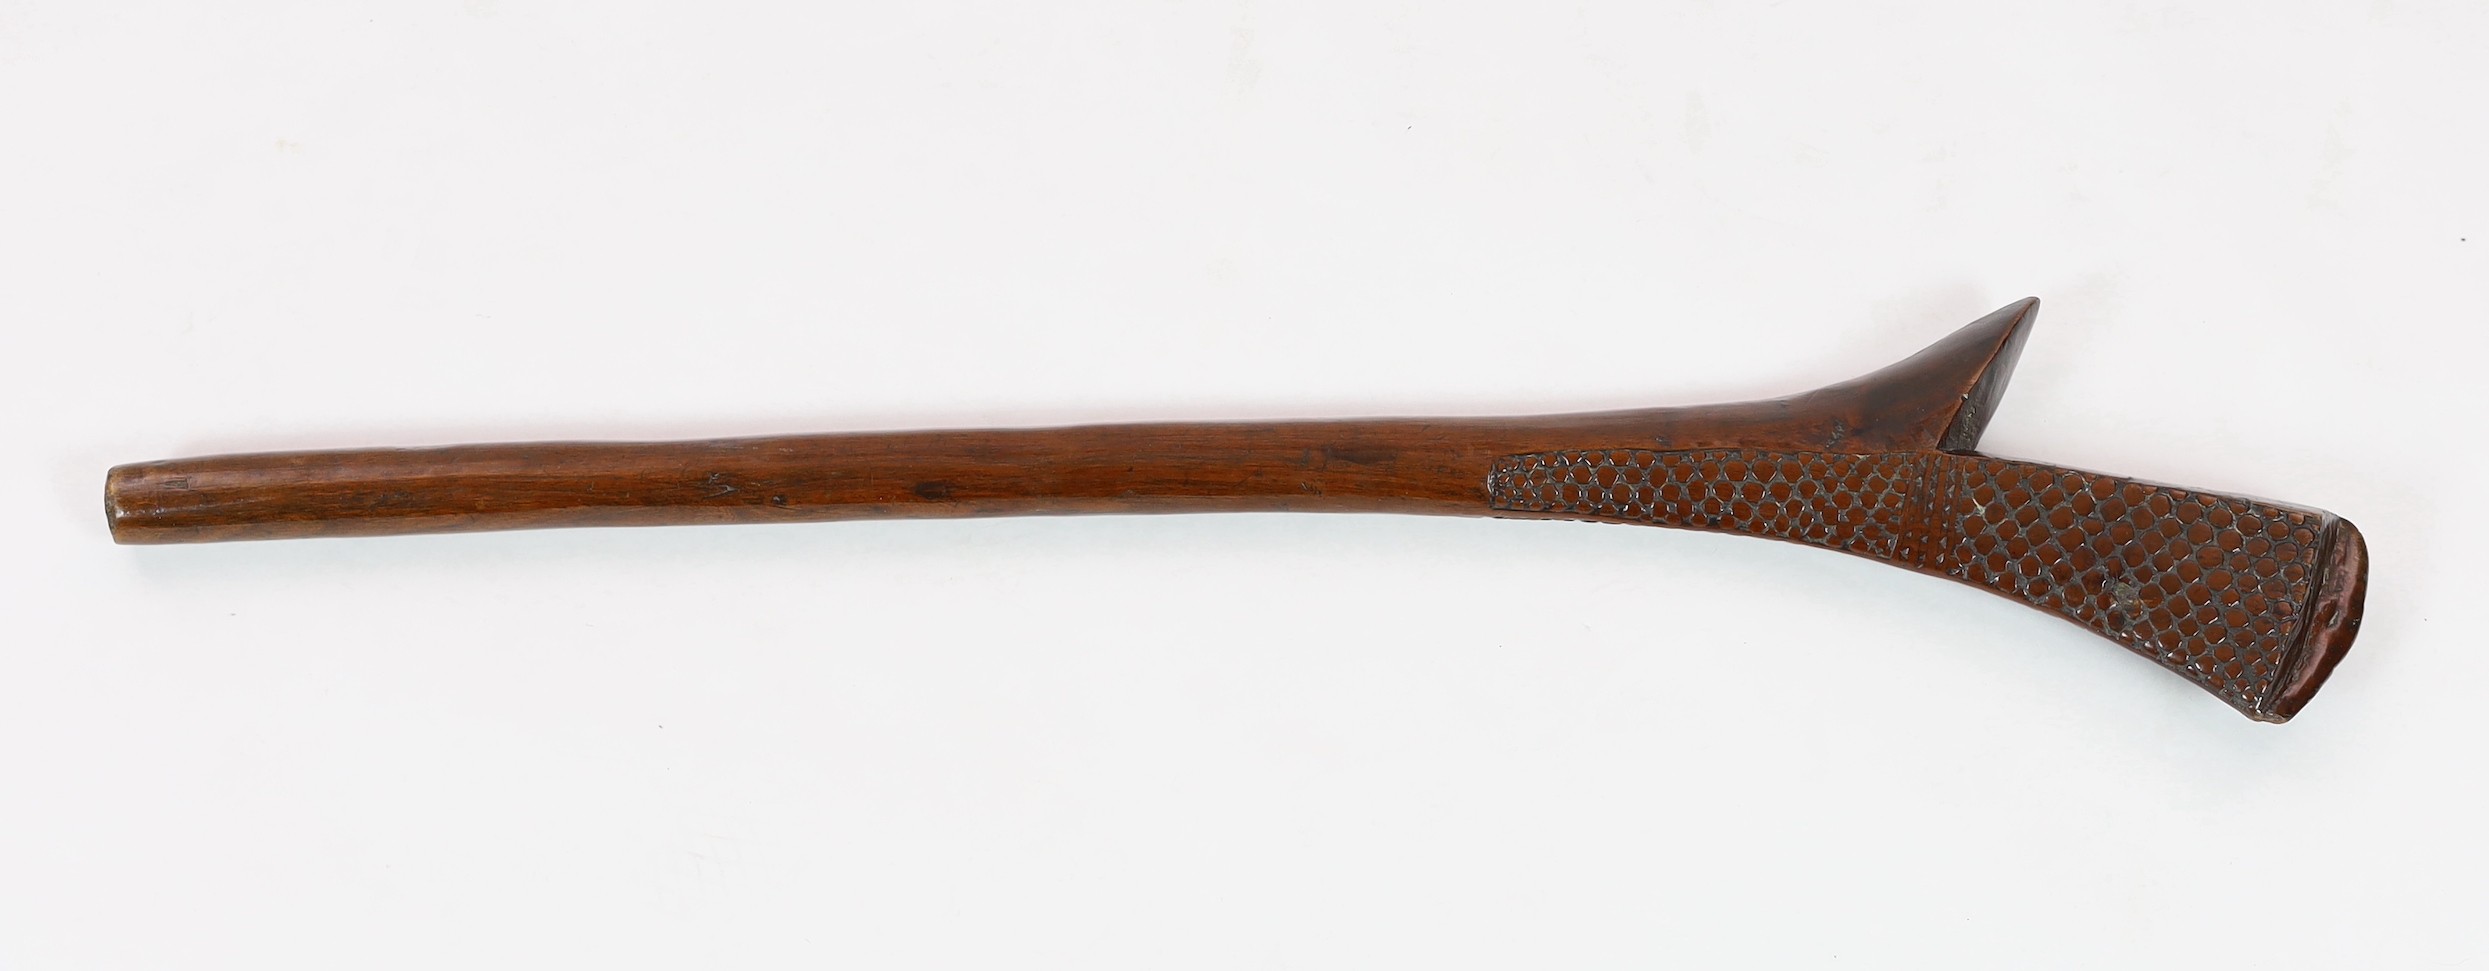 A Fijian hardwood bladed war club, 101cm long